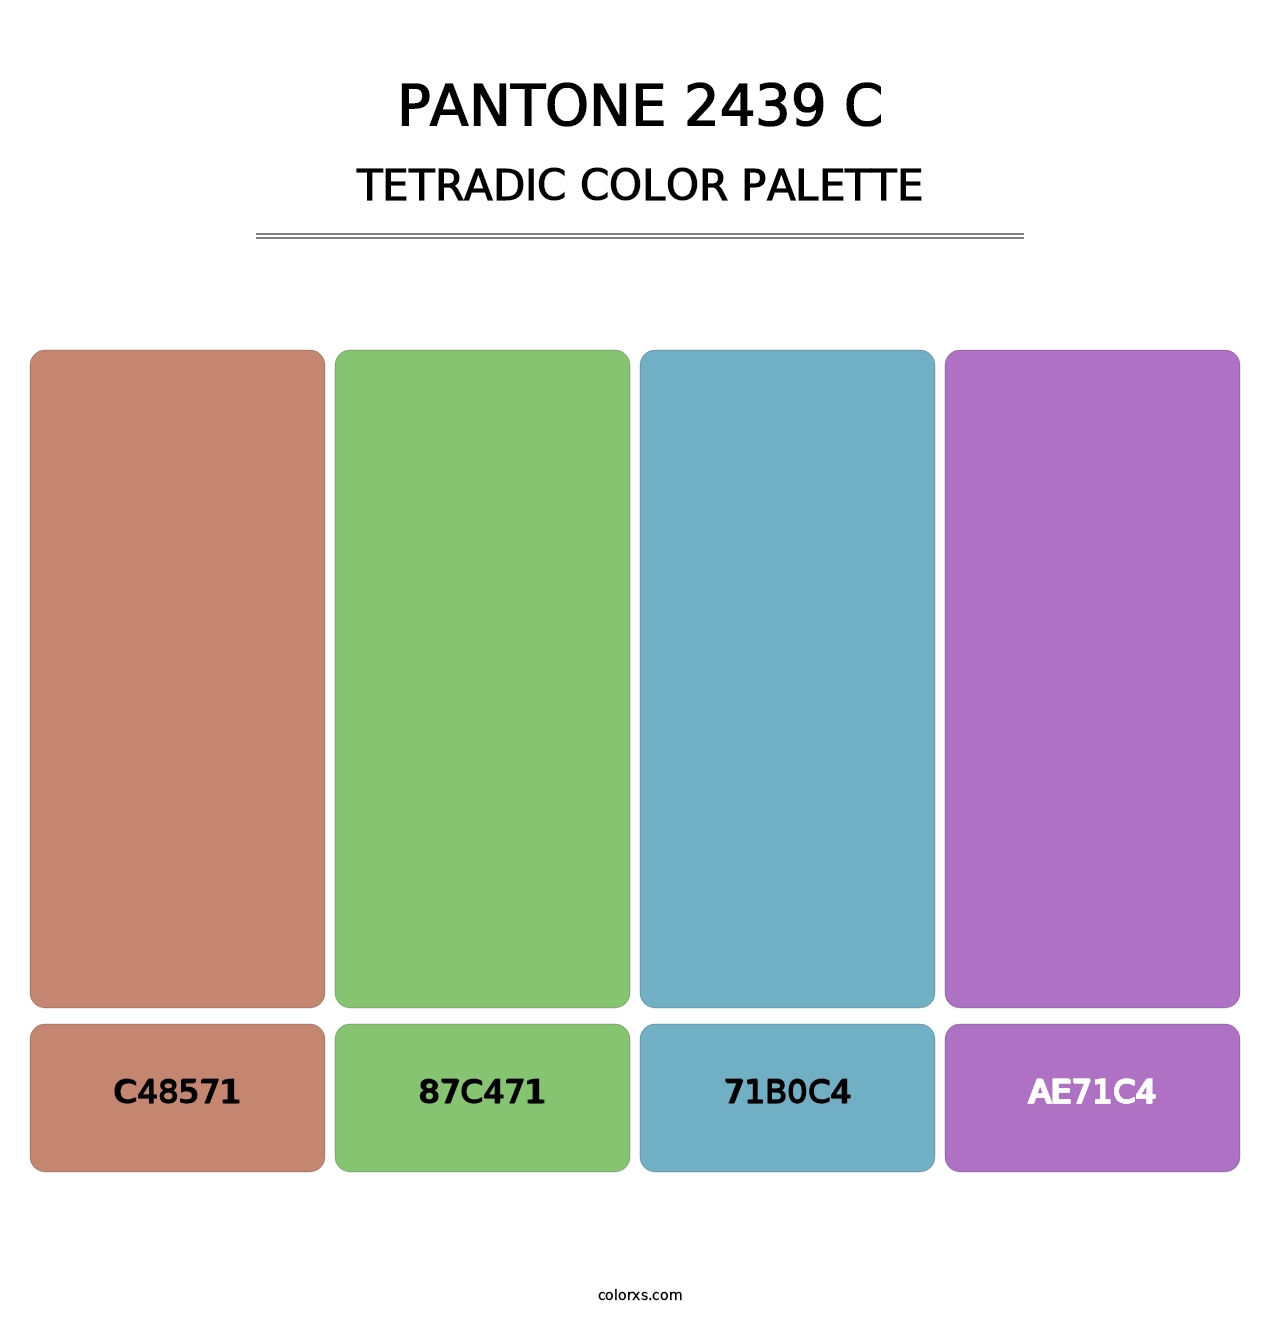 PANTONE 2439 C - Tetradic Color Palette